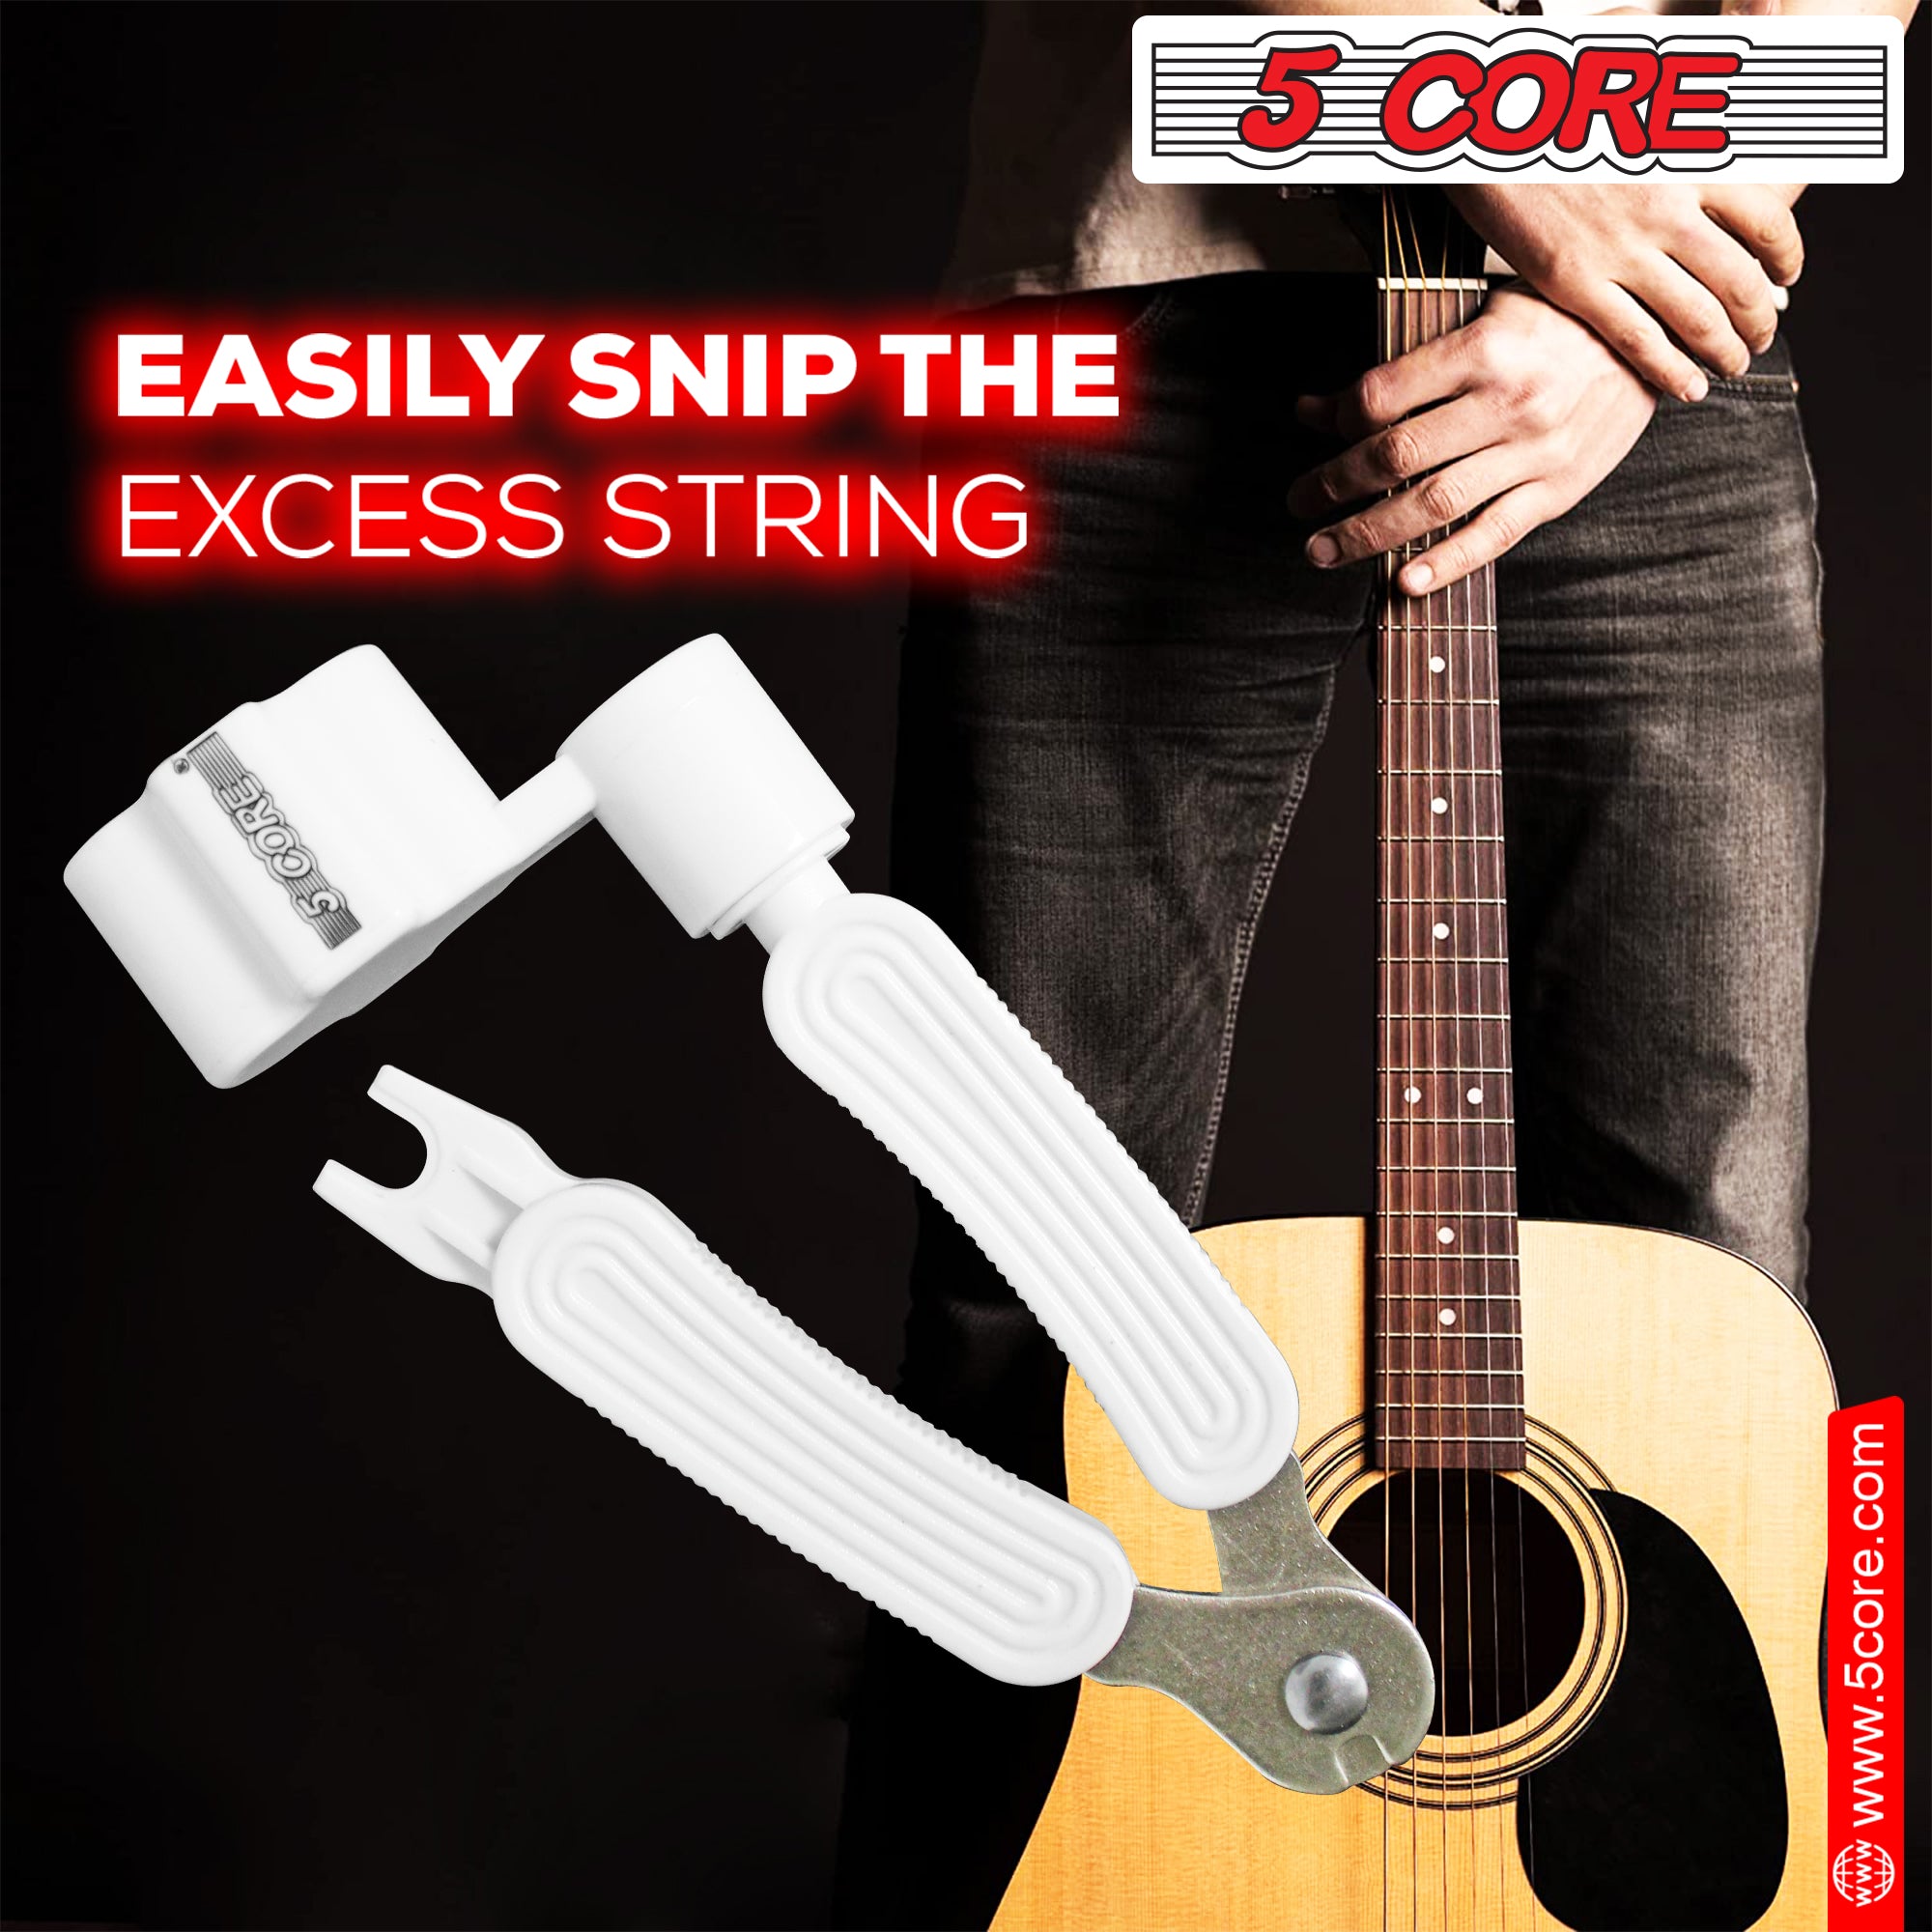 5Core Guitar String Winder  3 In 1 Multifunctional Guitar Maintenance Tools  w Bridge Pin Puller